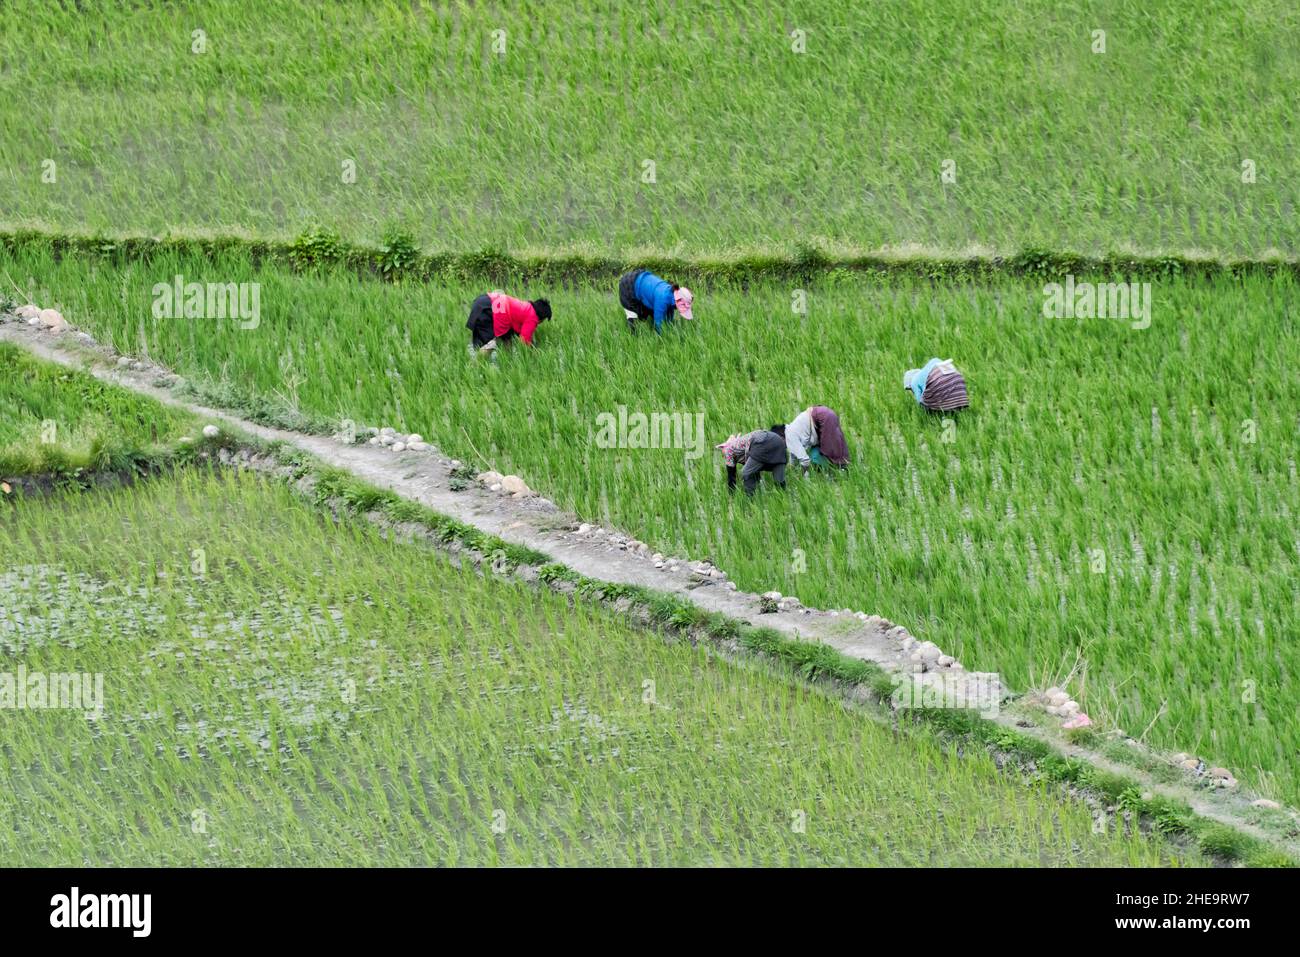 Famers transplanting rice seedlings in the rice paddy, Paro, Bhutan Stock Photo